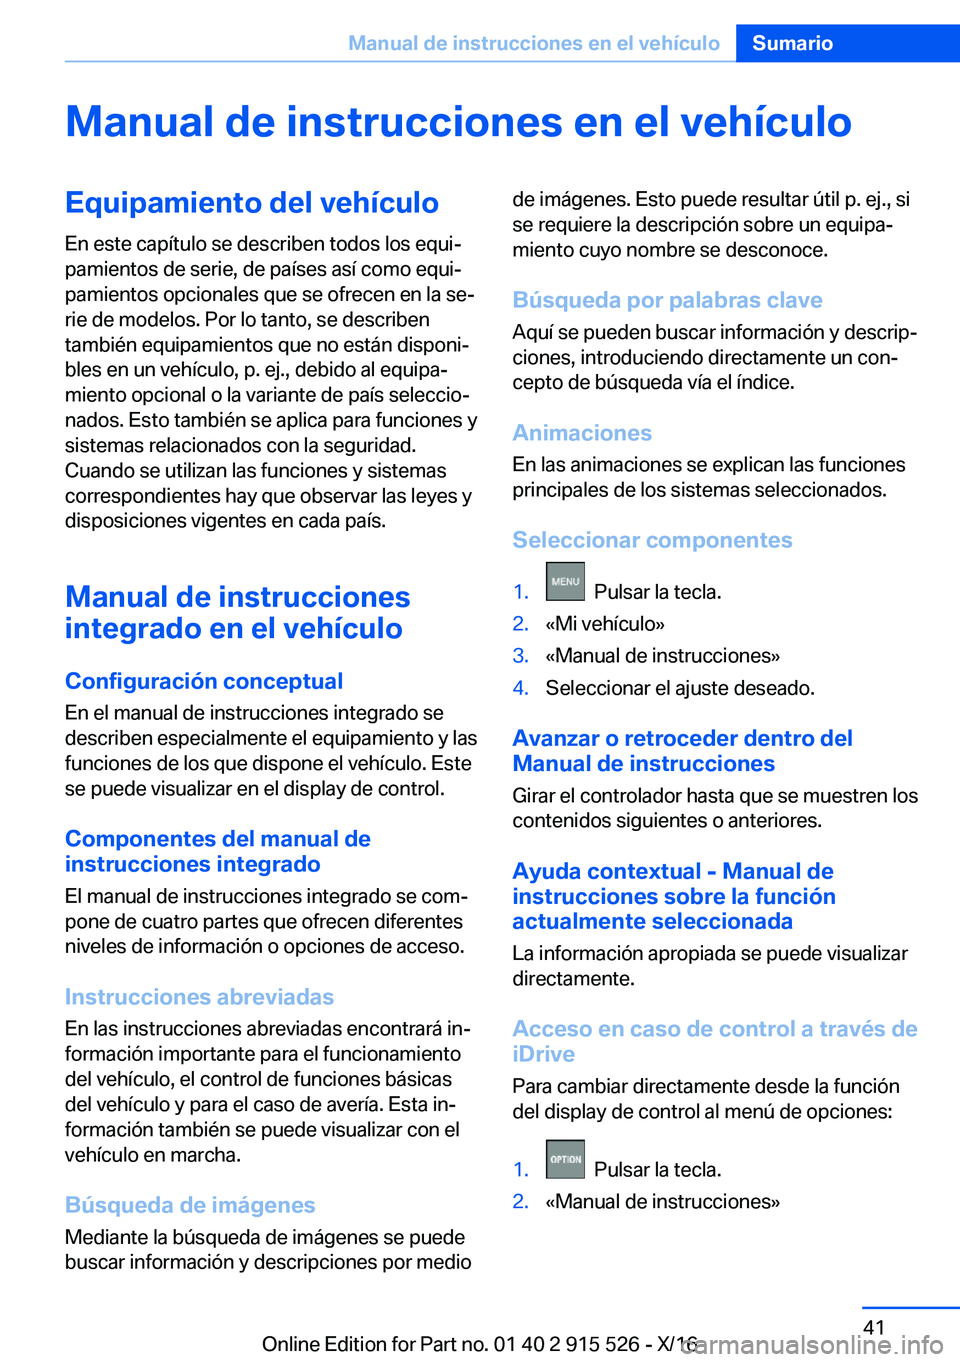 BMW X5 2017  Manuales de Empleo (in Spanish) �M�a�n�u�a�l��d�e��i�n�s�t�r�u�c�c�i�o�n�e�s��e�n��e�l��v�e�h�